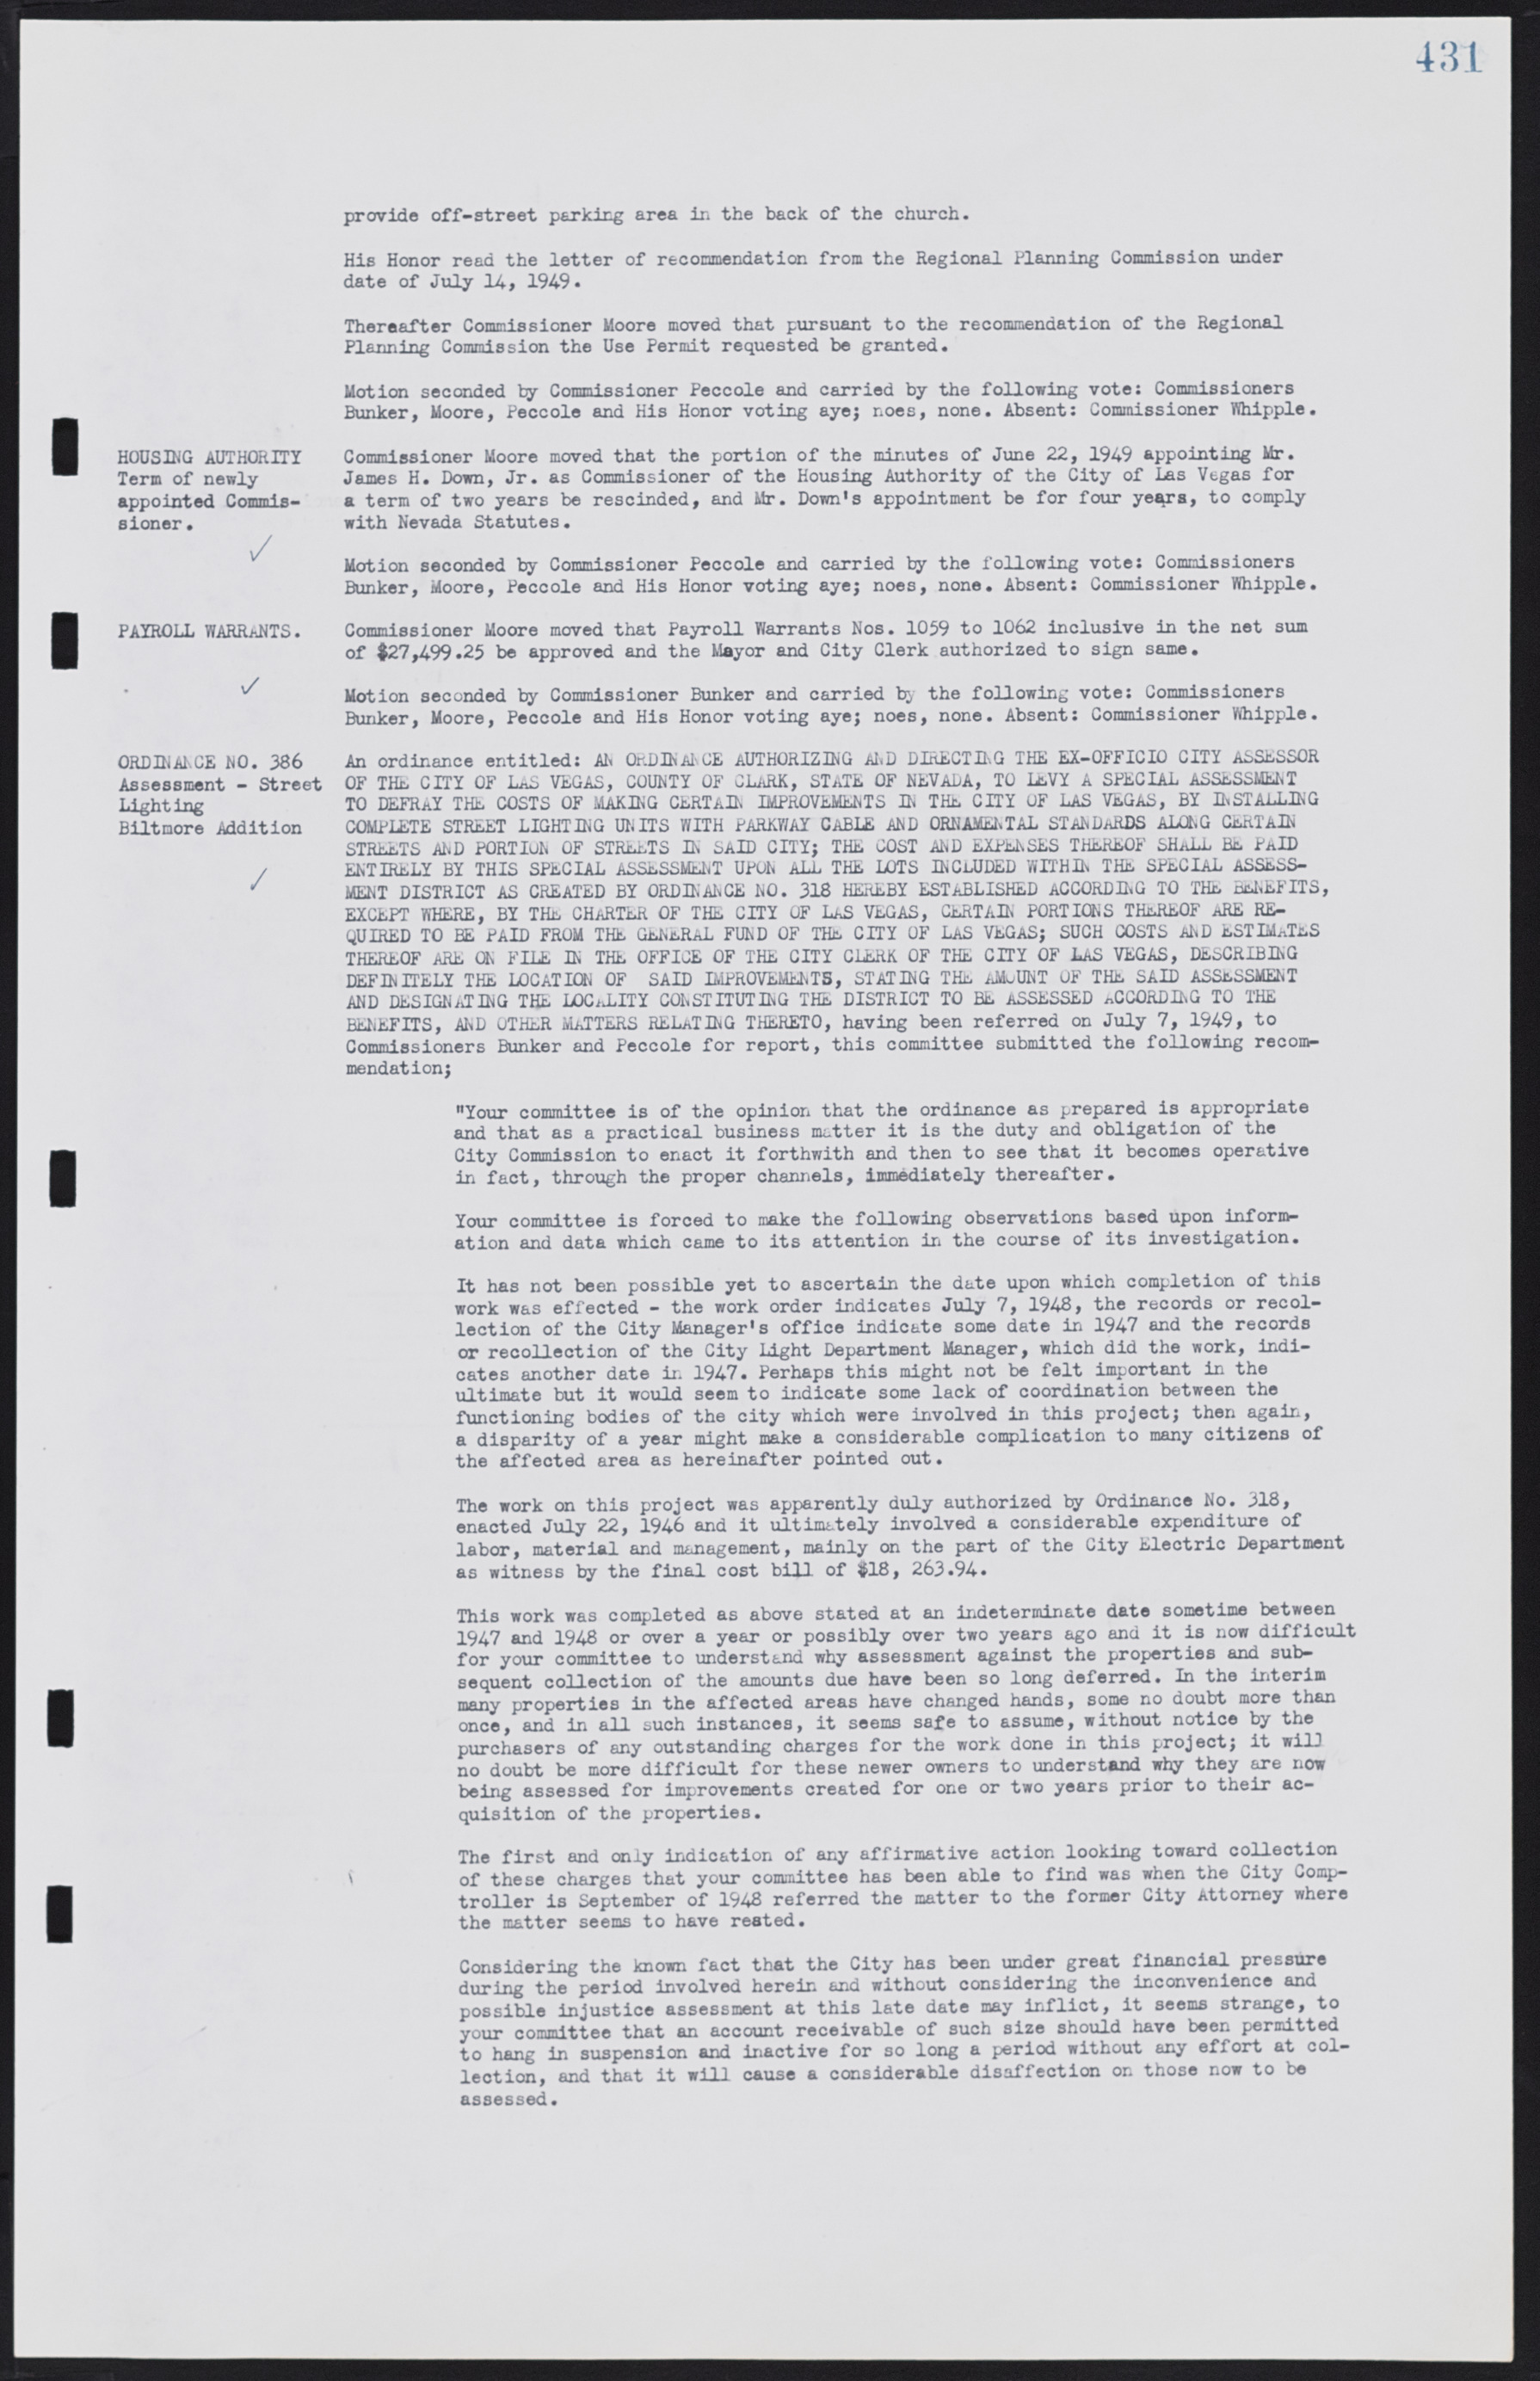 Las Vegas City Commission Minutes, January 7, 1947 to October 26, 1949, lvc000006-463